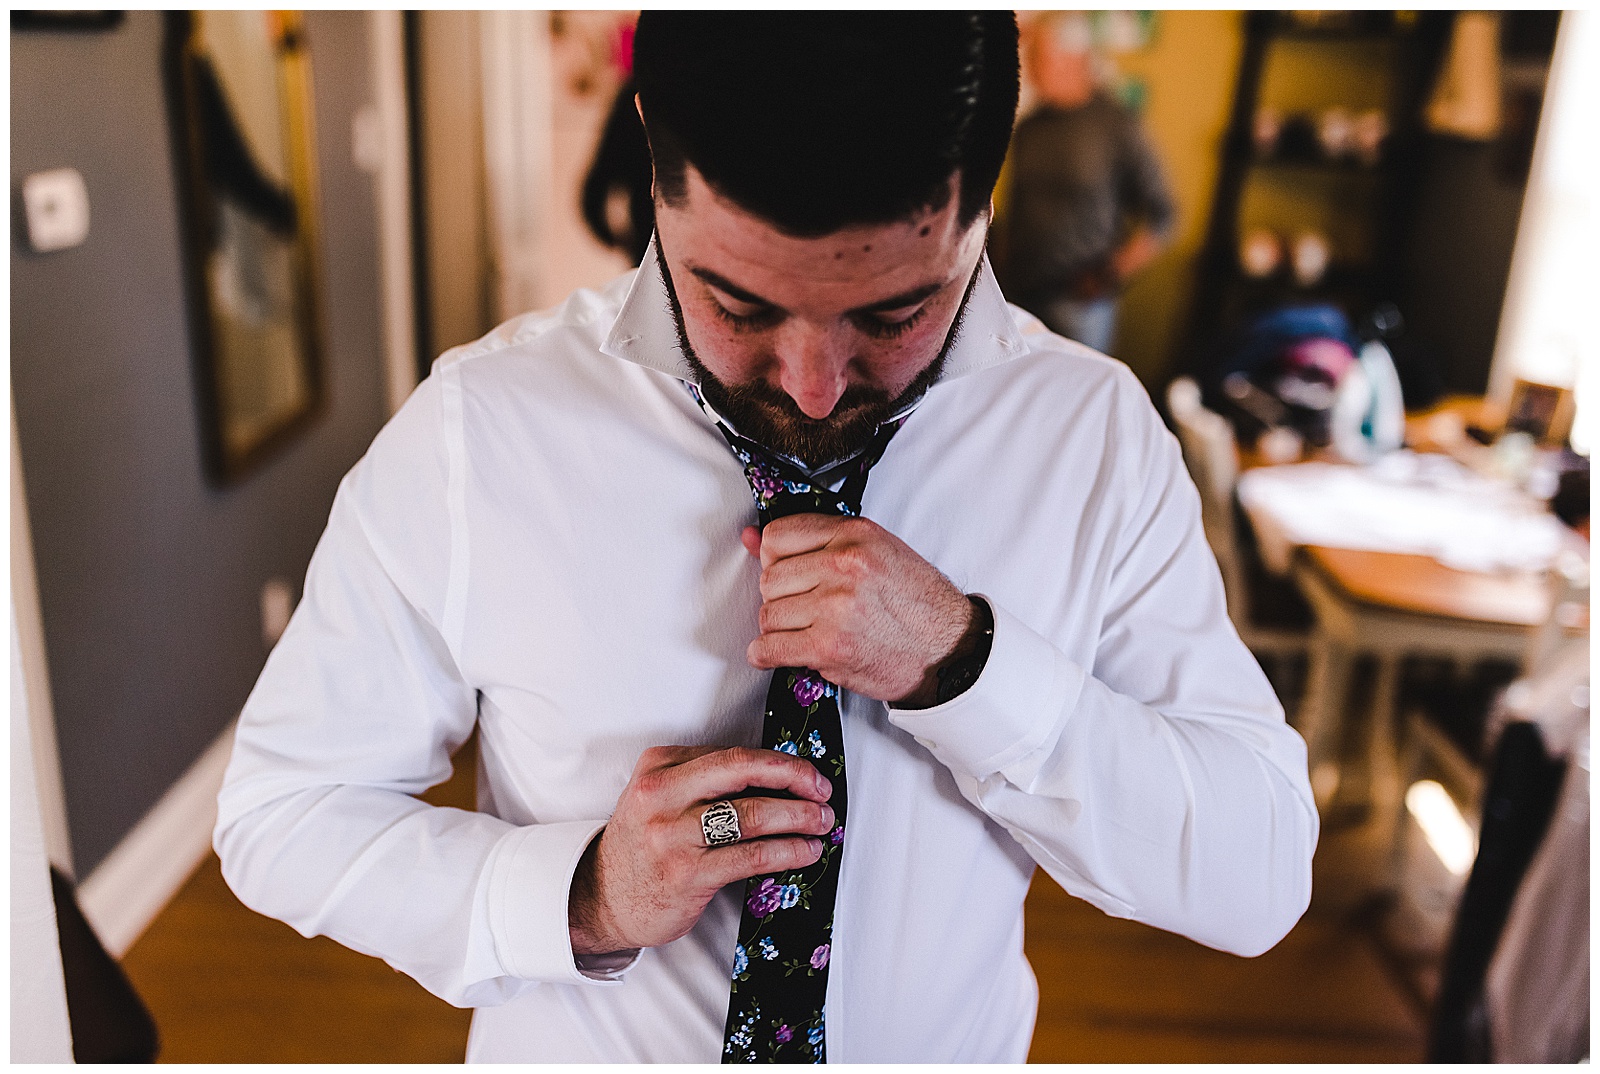 Adjusting that lovely boho tie.